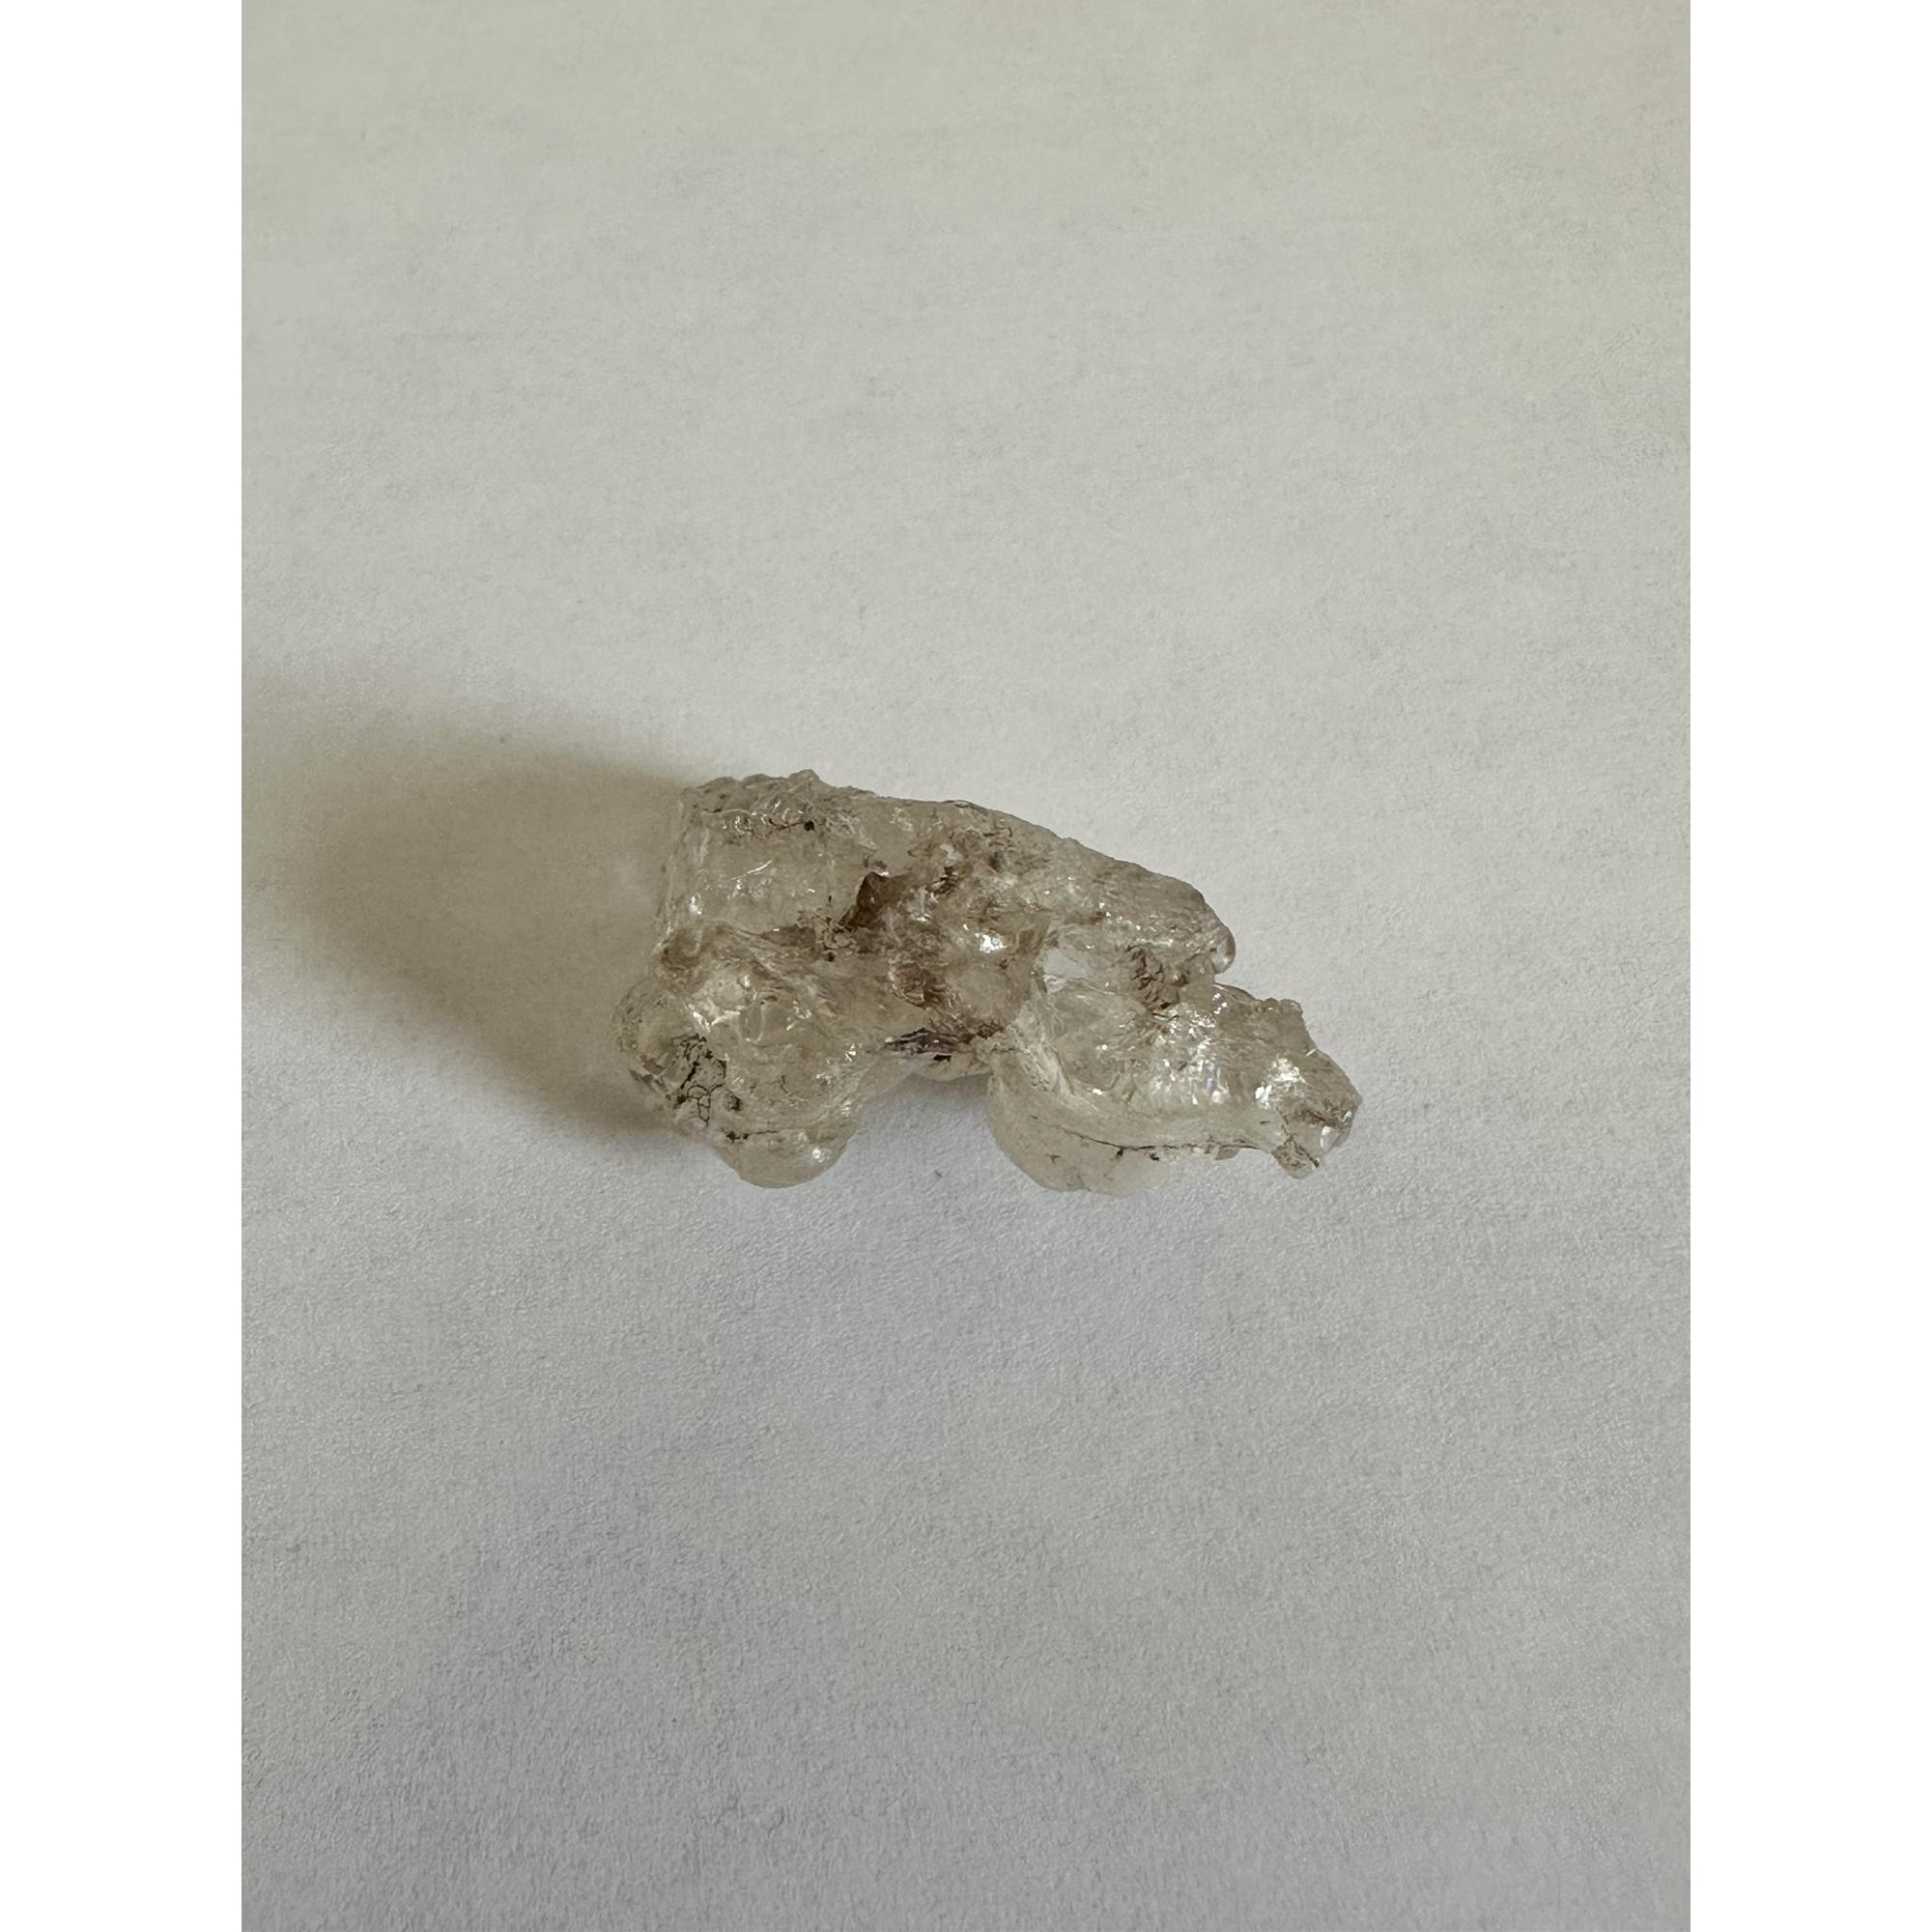 Opal, Hyalite, uv reactive, 4.92 grams, 1 1/4 inch, Mexico Prehistoric Online